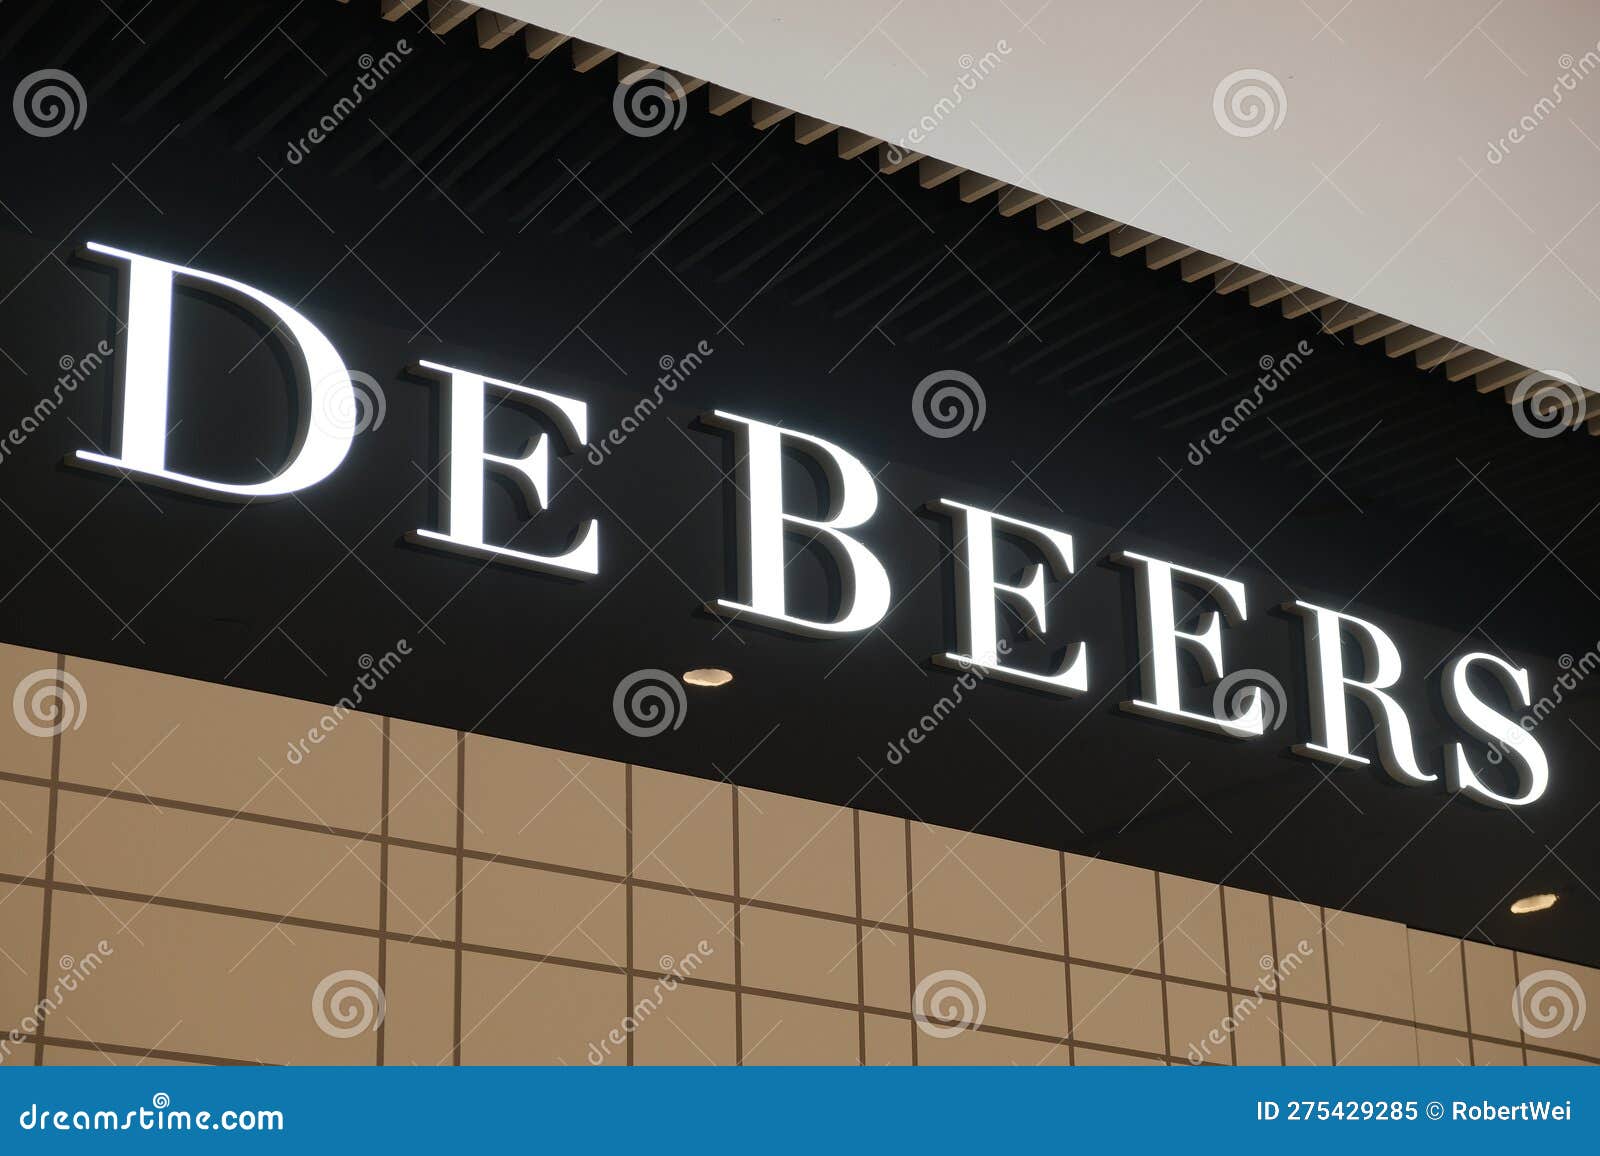 Close Up De Beers Store Brand Logo Editorial Image - Image of consortium,  brand: 275429285